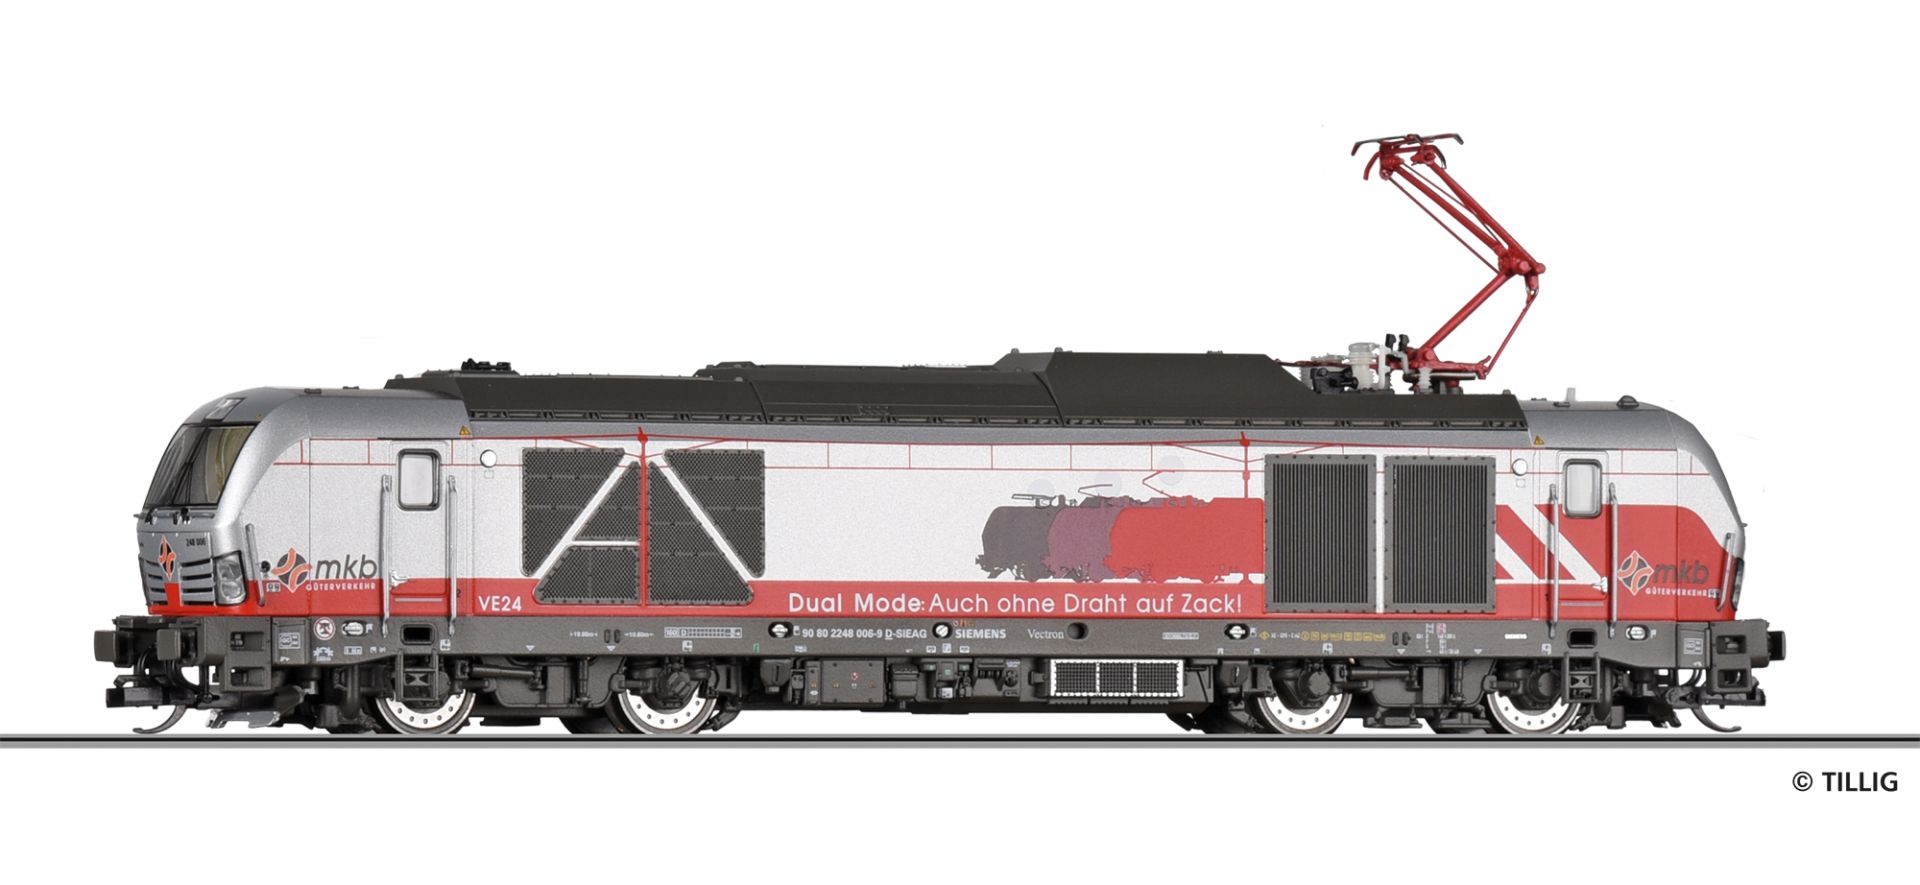 04866 | Dual Mode Lokomotive Mindener Kreisbahnen GmbH